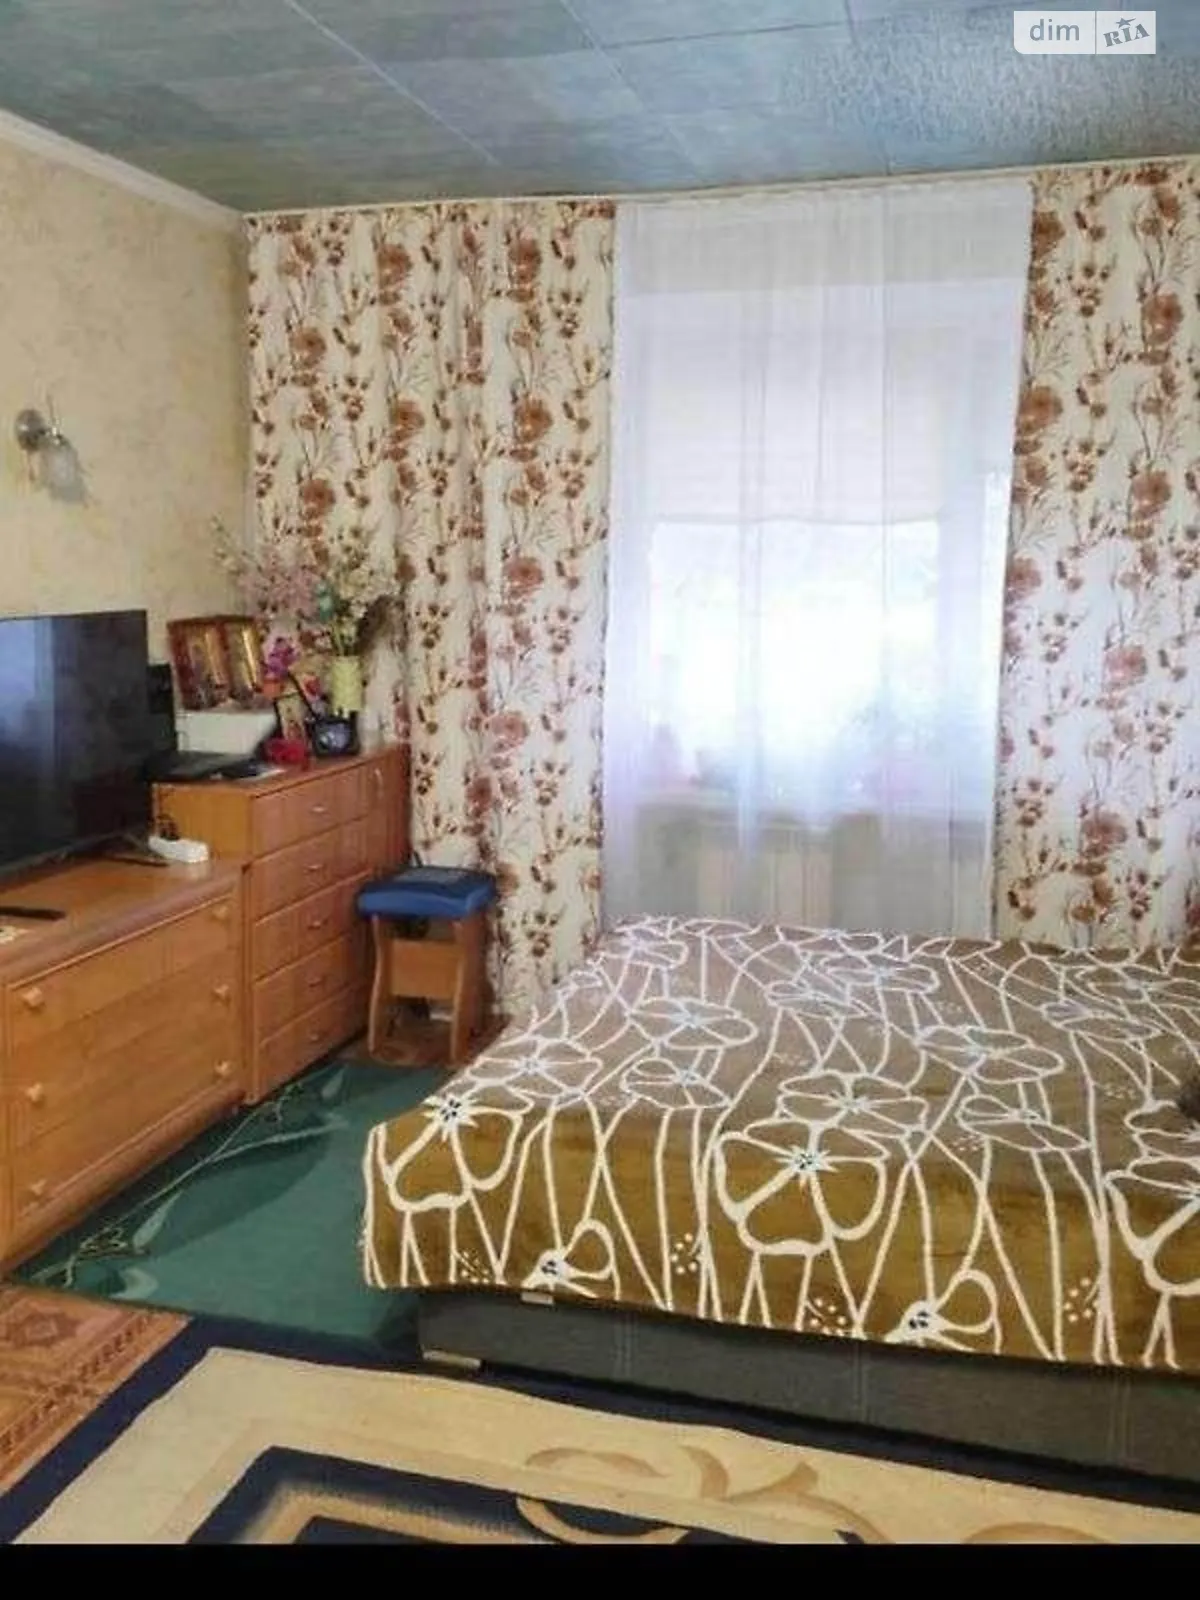 Продается комната 48 кв. м в Киеве, цена: 28500 $ - фото 1